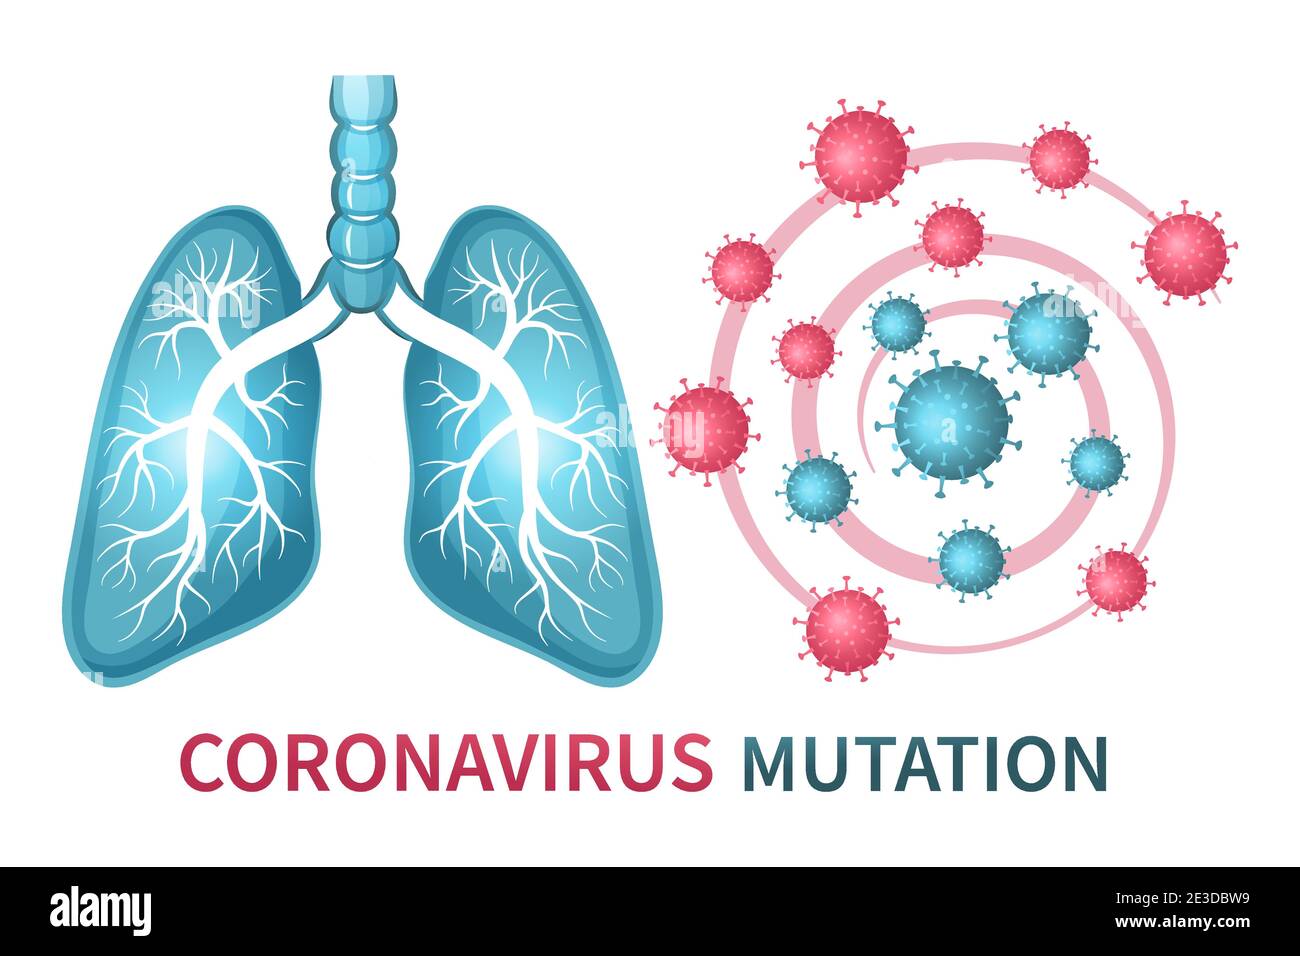 Coronavirus Mutation Zeichen. Evolution Сovid-19. Biologieforschung mutierte Viruszelle infizieren das menschliche Atmungssystem. Behandlung Lungenentzündung Lunge. Vektor Stock Vektor